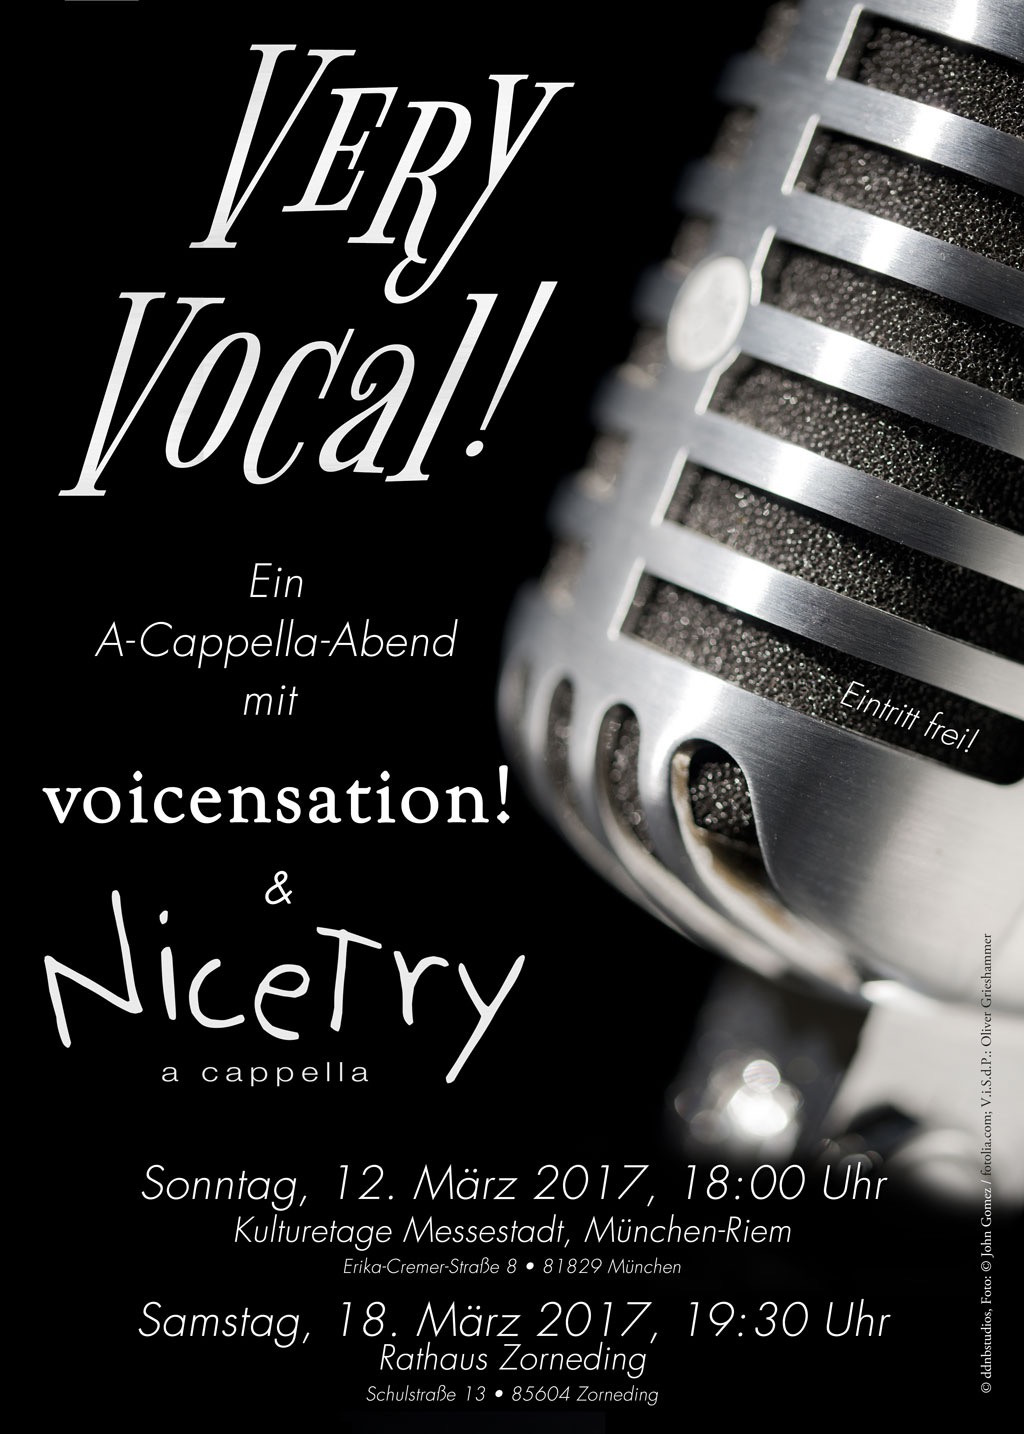 Very Vocal! Plakat